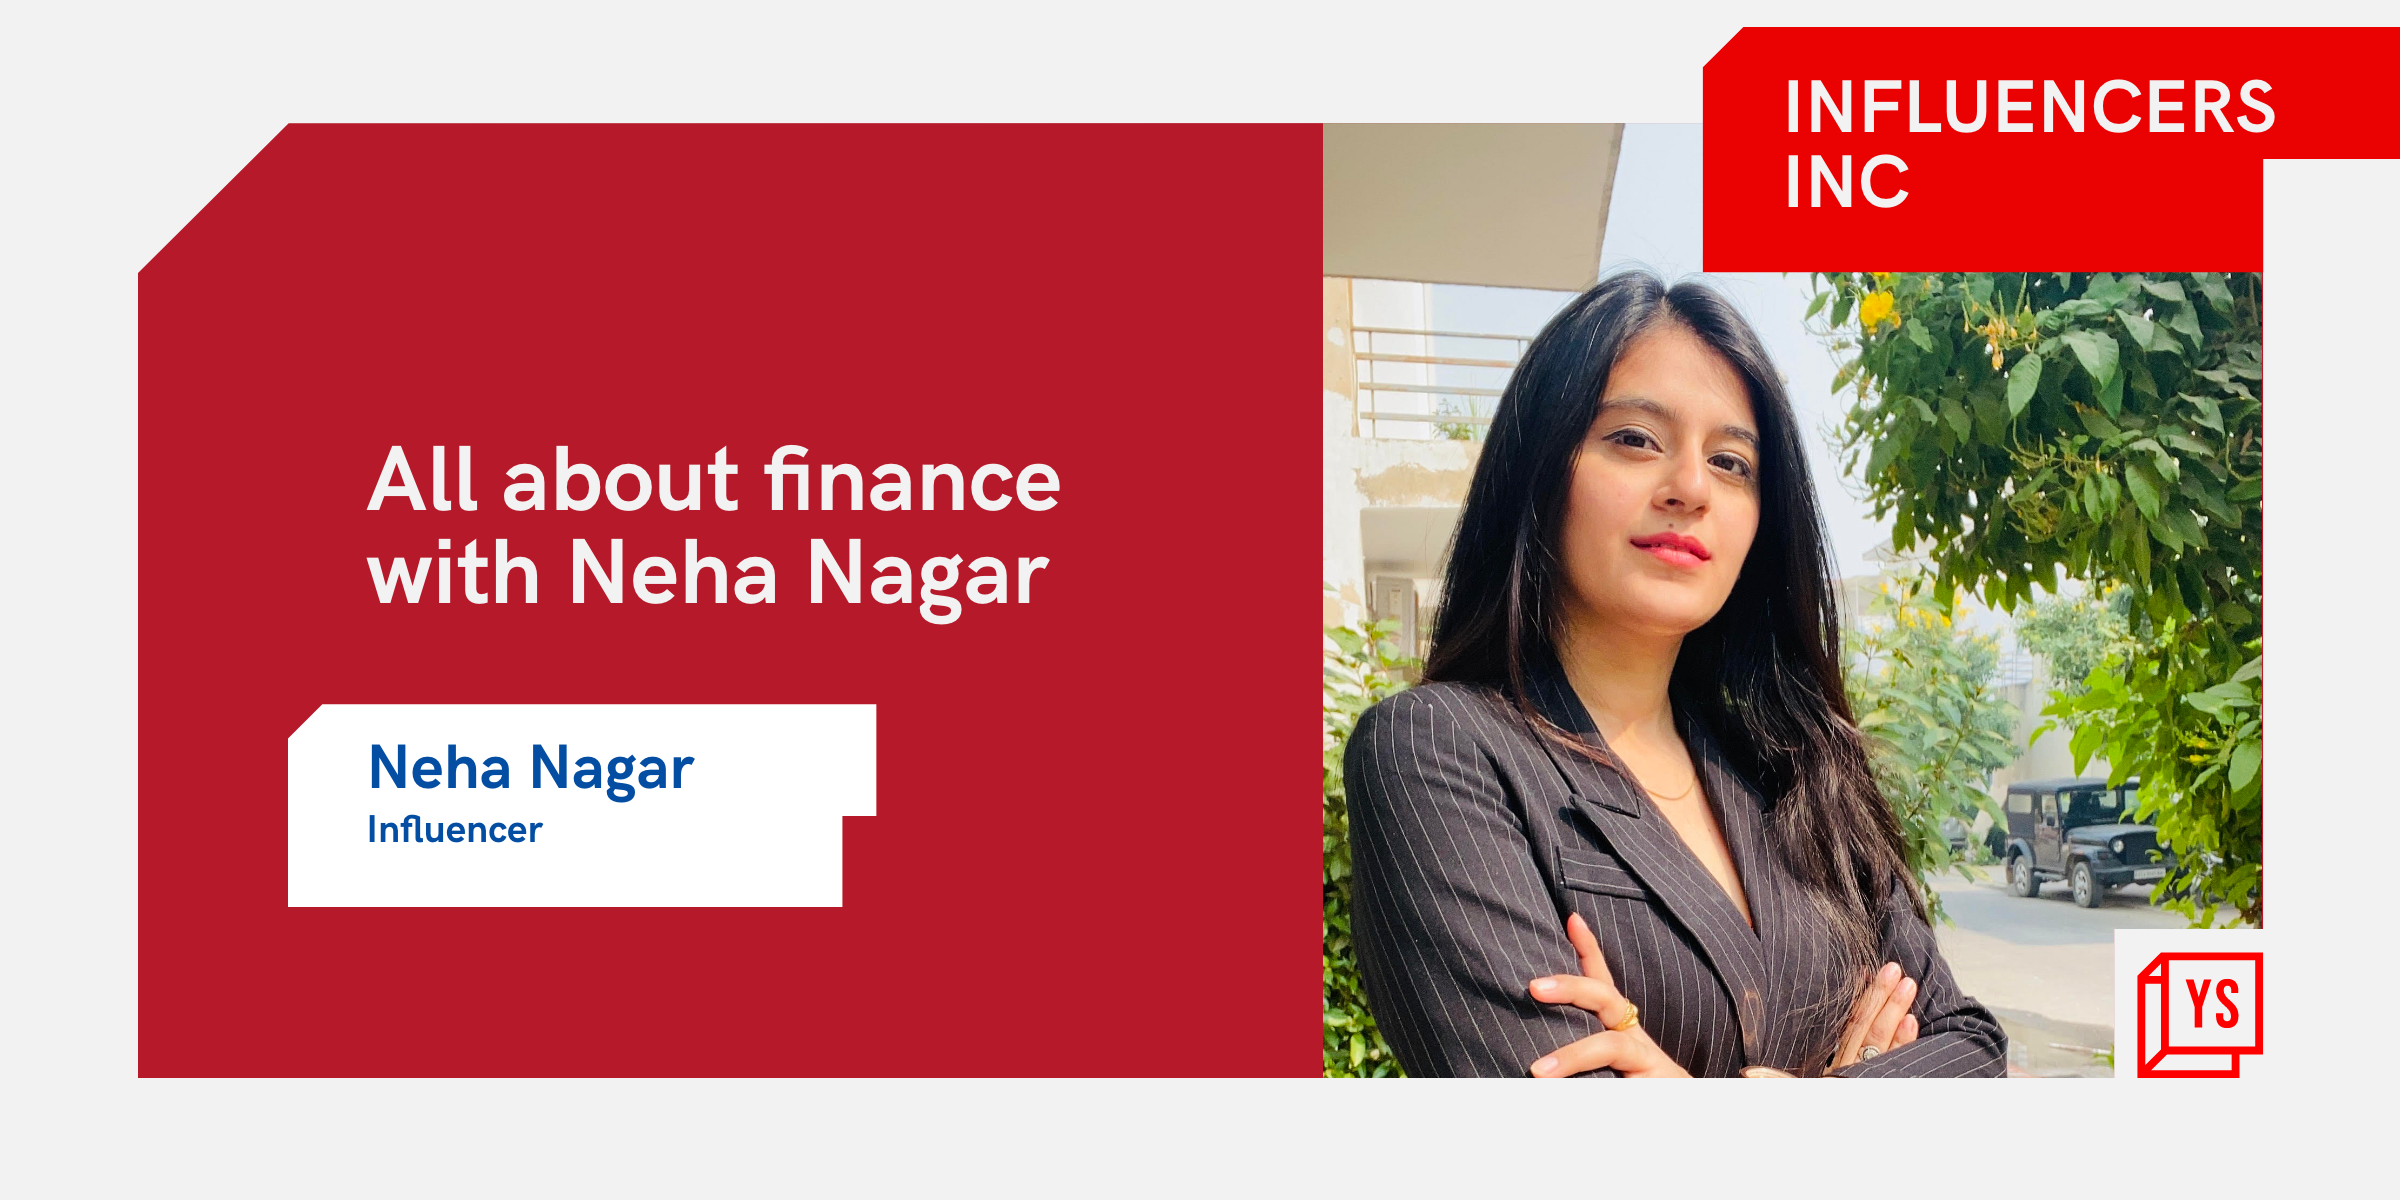 Neha Nagar’s fun and easy approach to finance